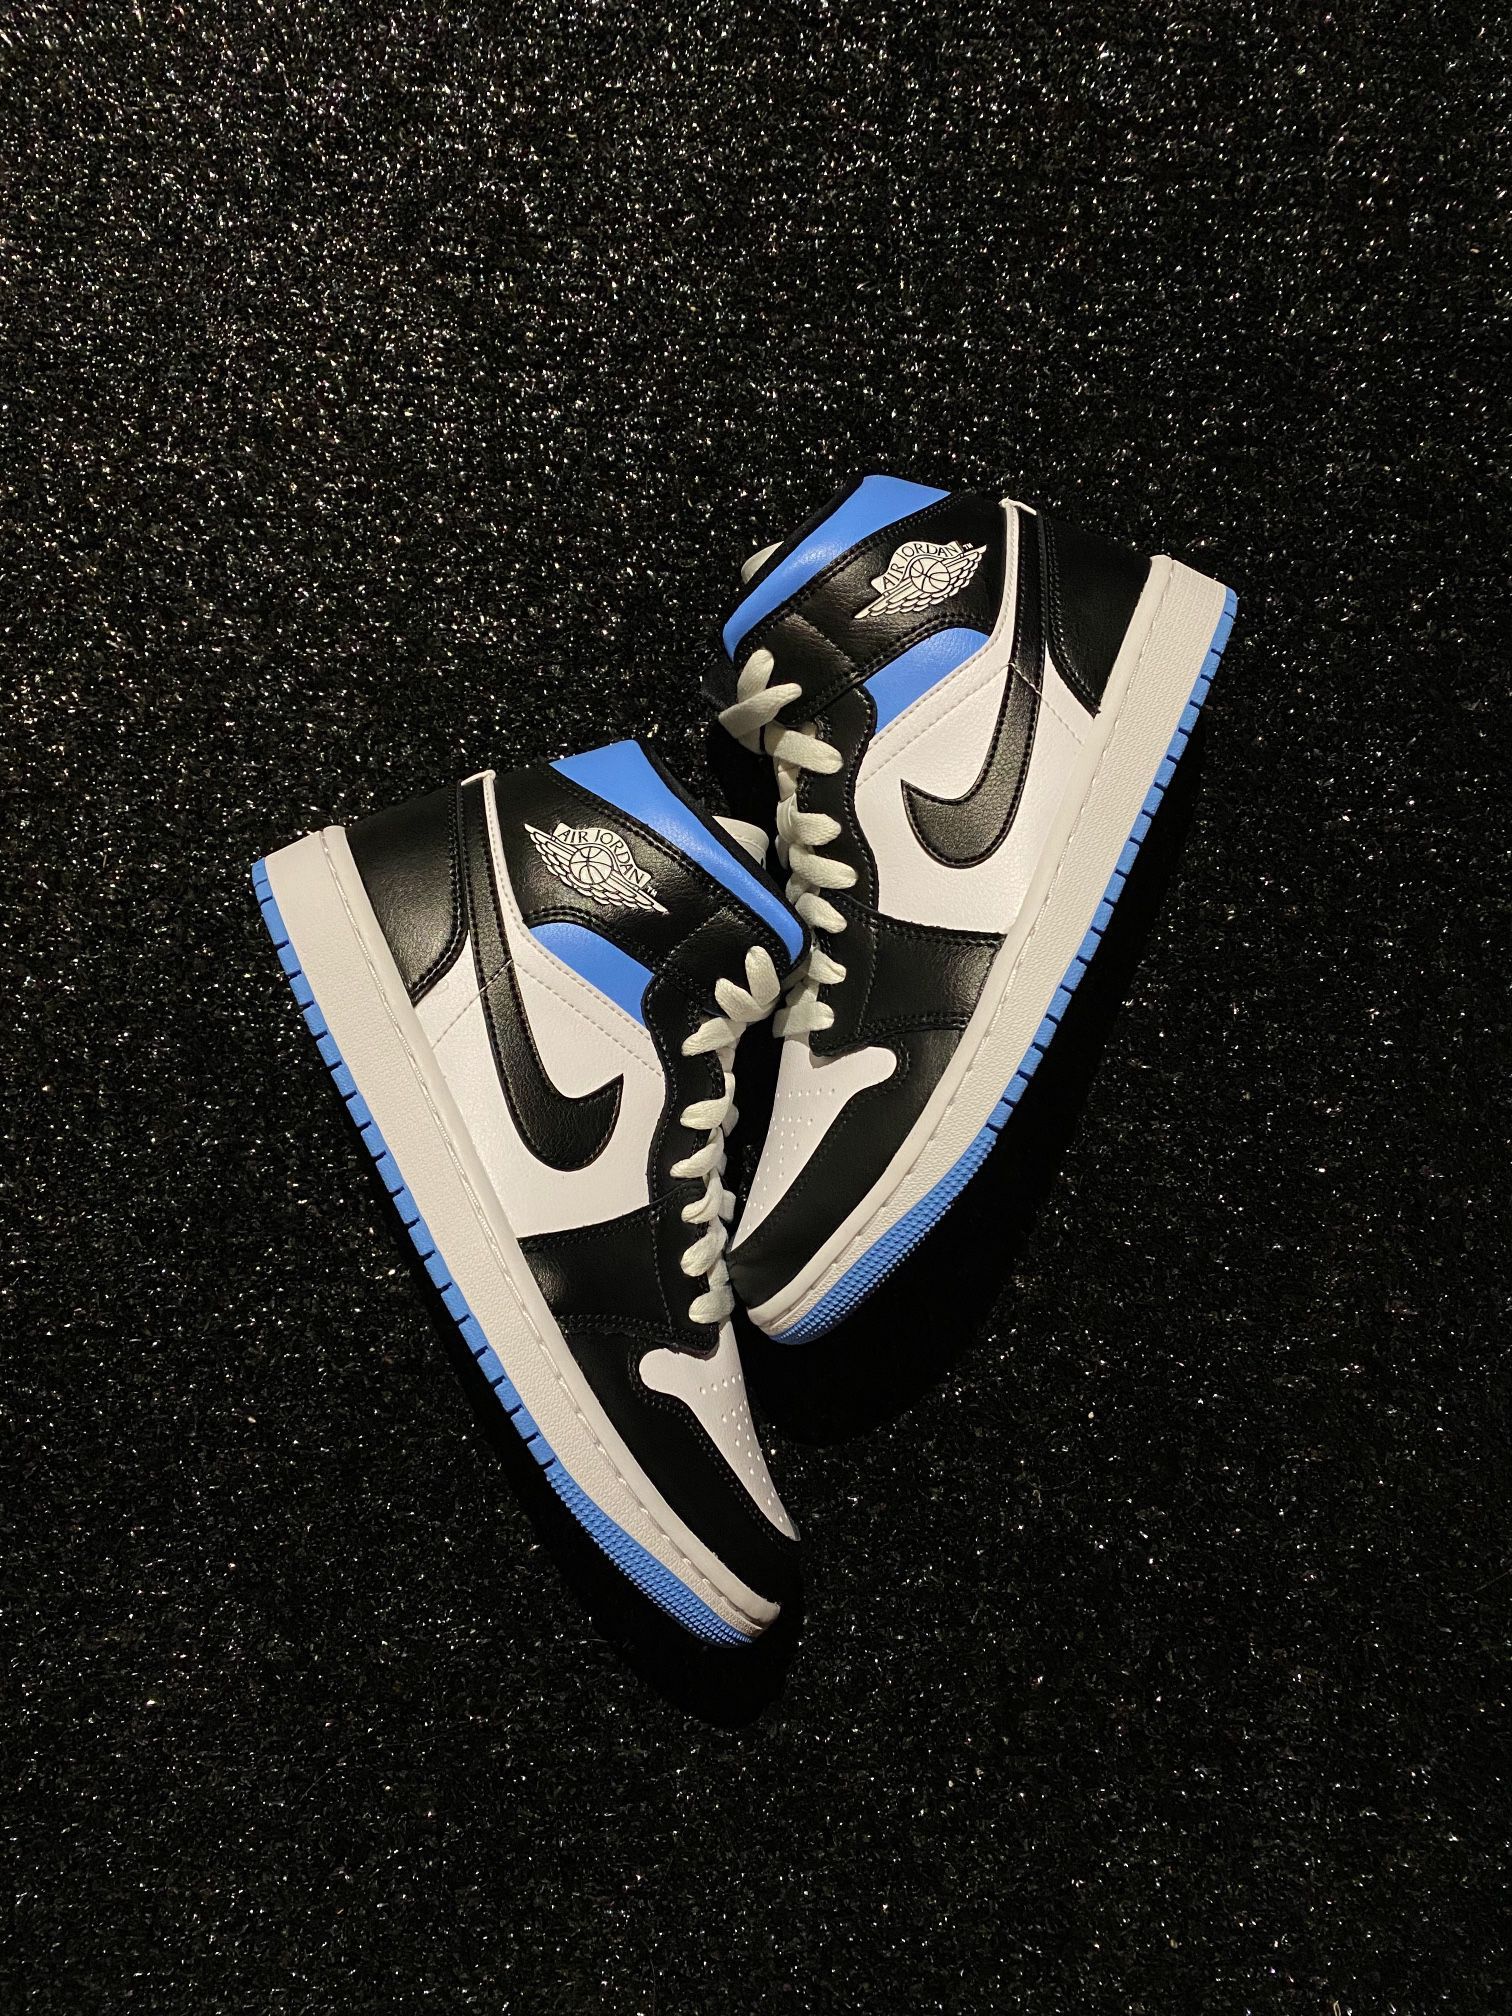 A pair of sneakers that are on the ground - Air Jordan 1, Air Jordan